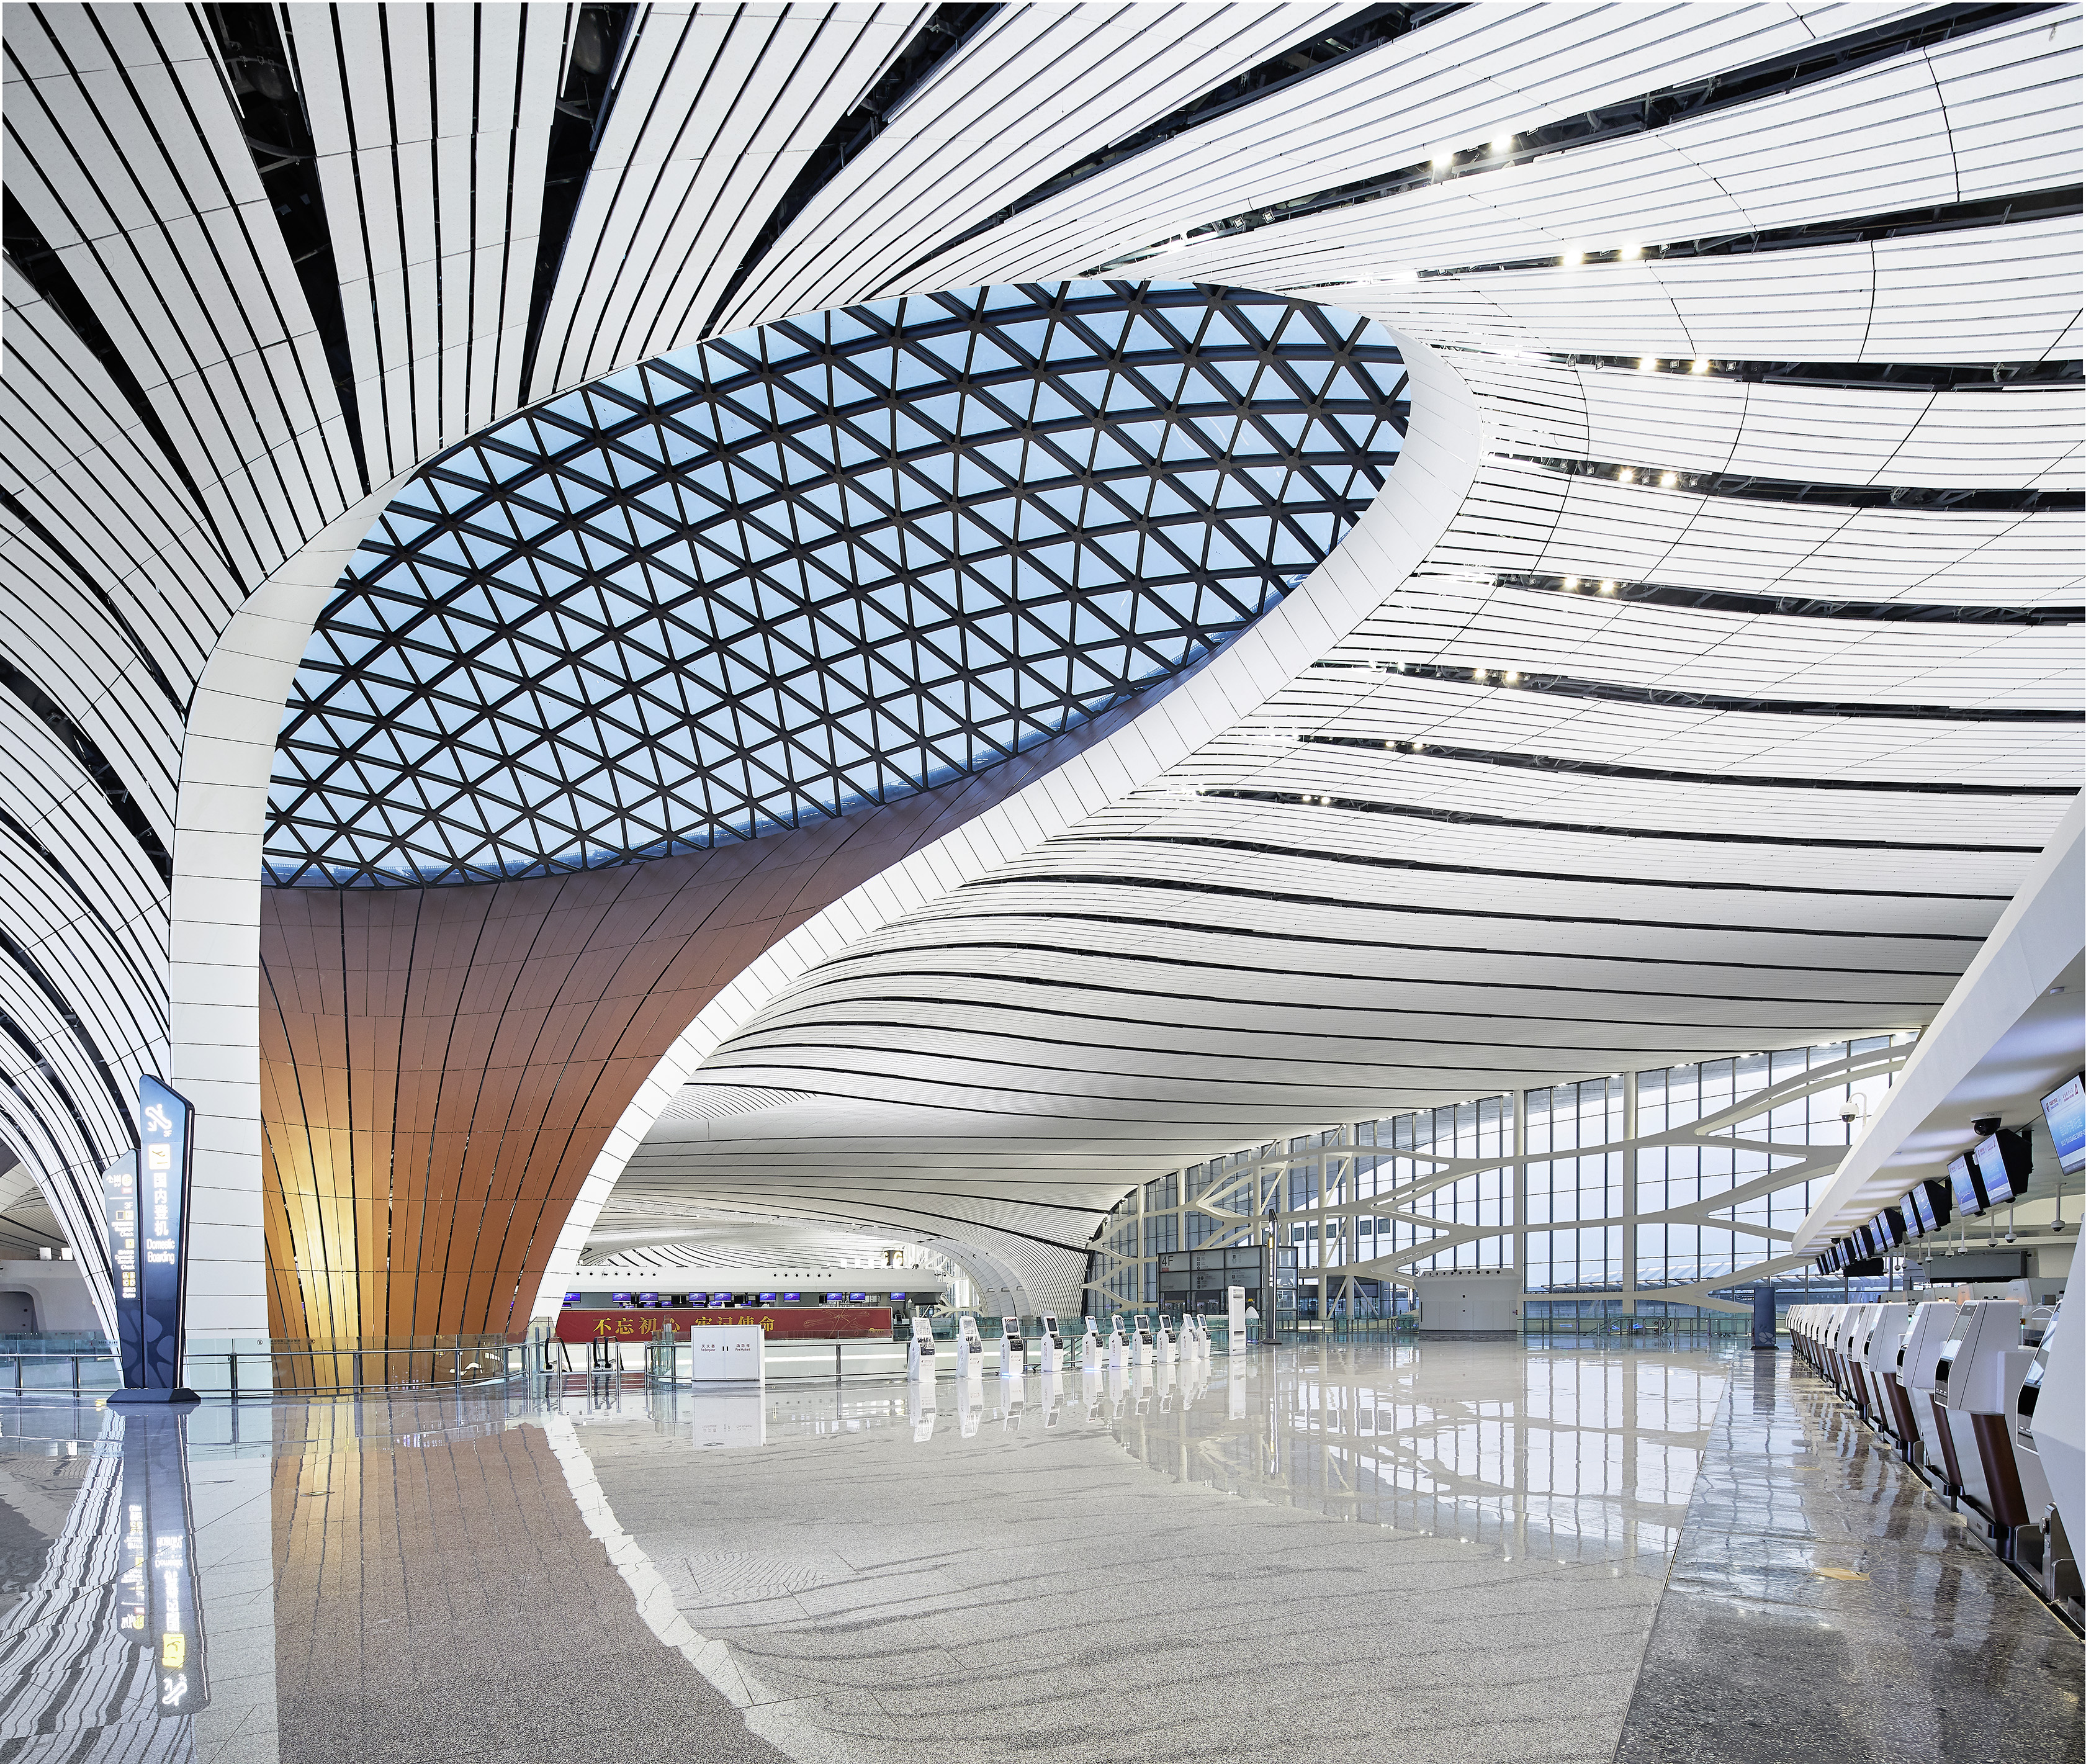 New beijing. Заха Хадид Пекинский аэропорт. Пекинский Международный аэропорт Дасин. Аэропорт Пекин Дасин, Китай. Архитектор Хадид Заха аэропорт Пекина.